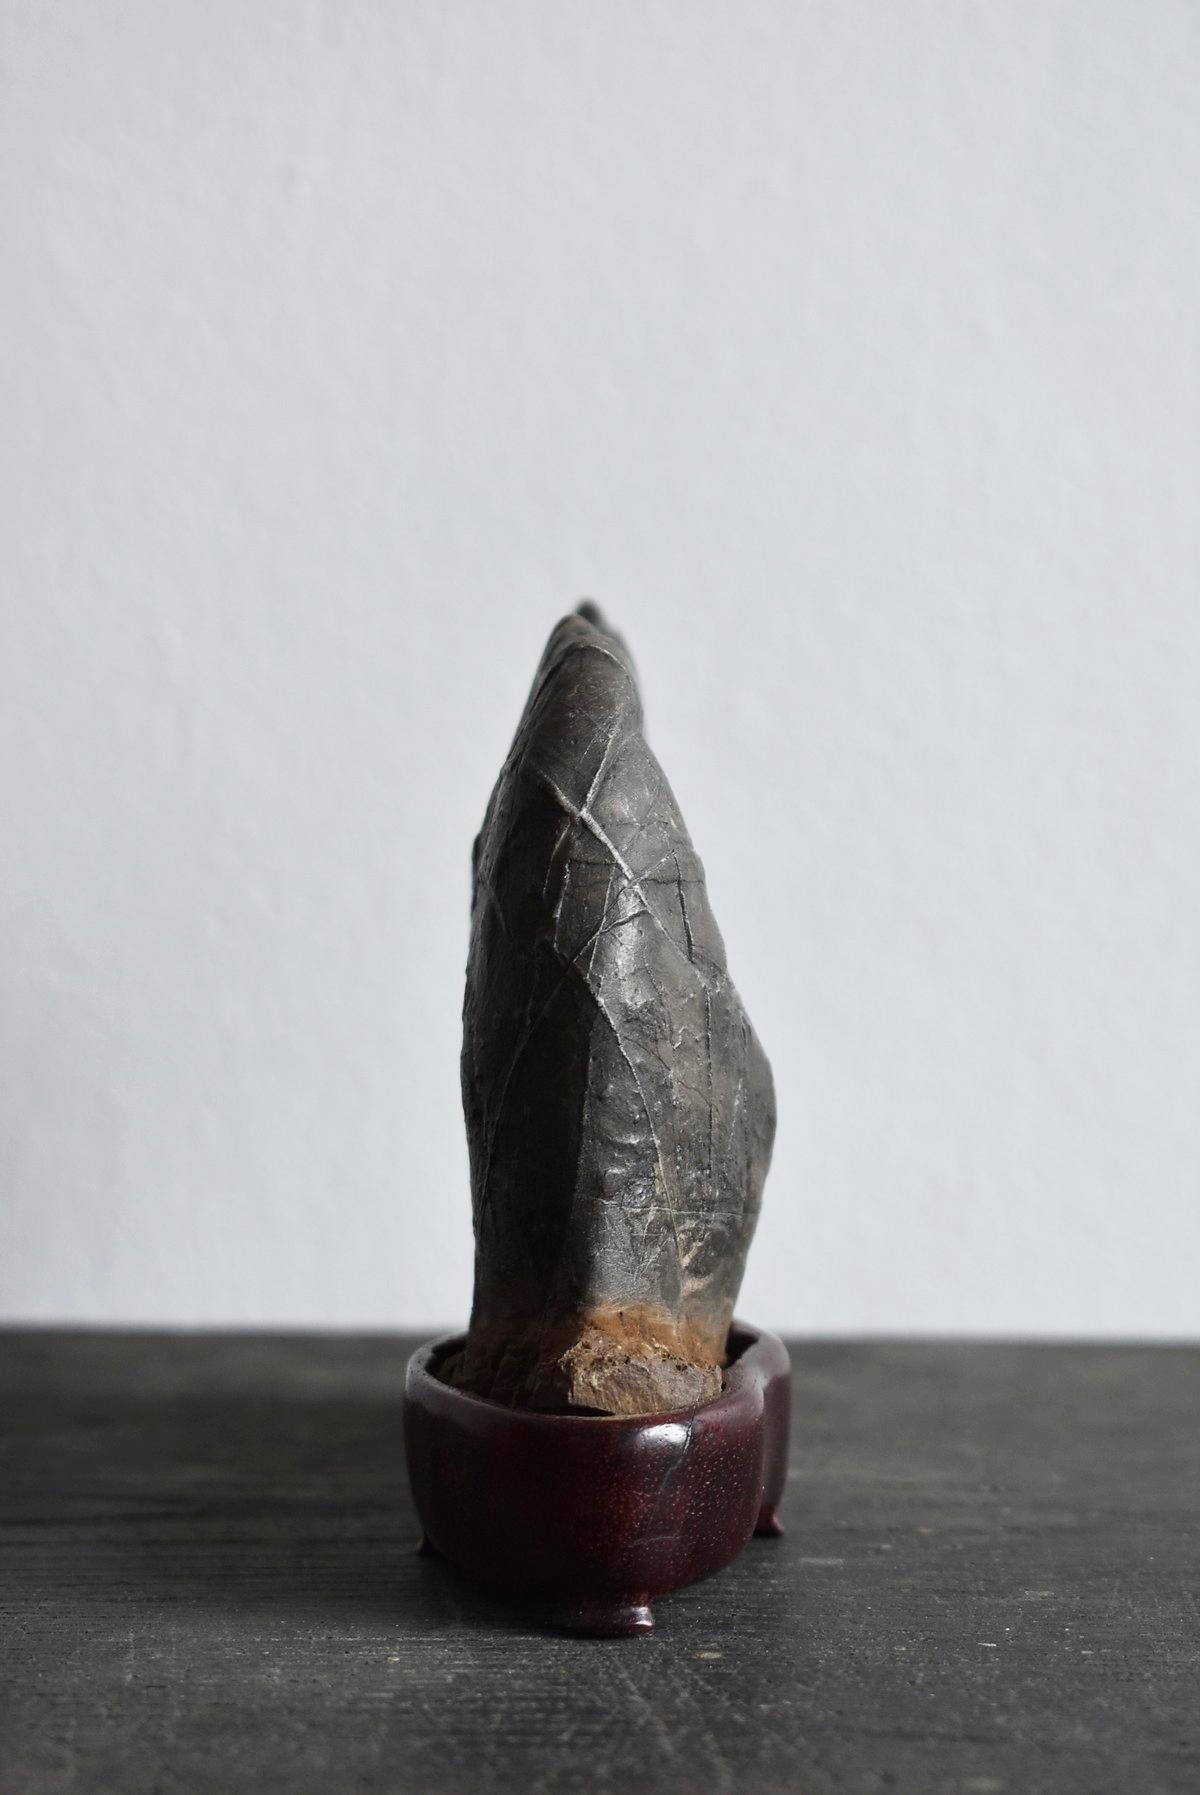 Limestone Small Japanese Old Stone / Elephant-Shaped Ornamental Stone / Scholar's Objects